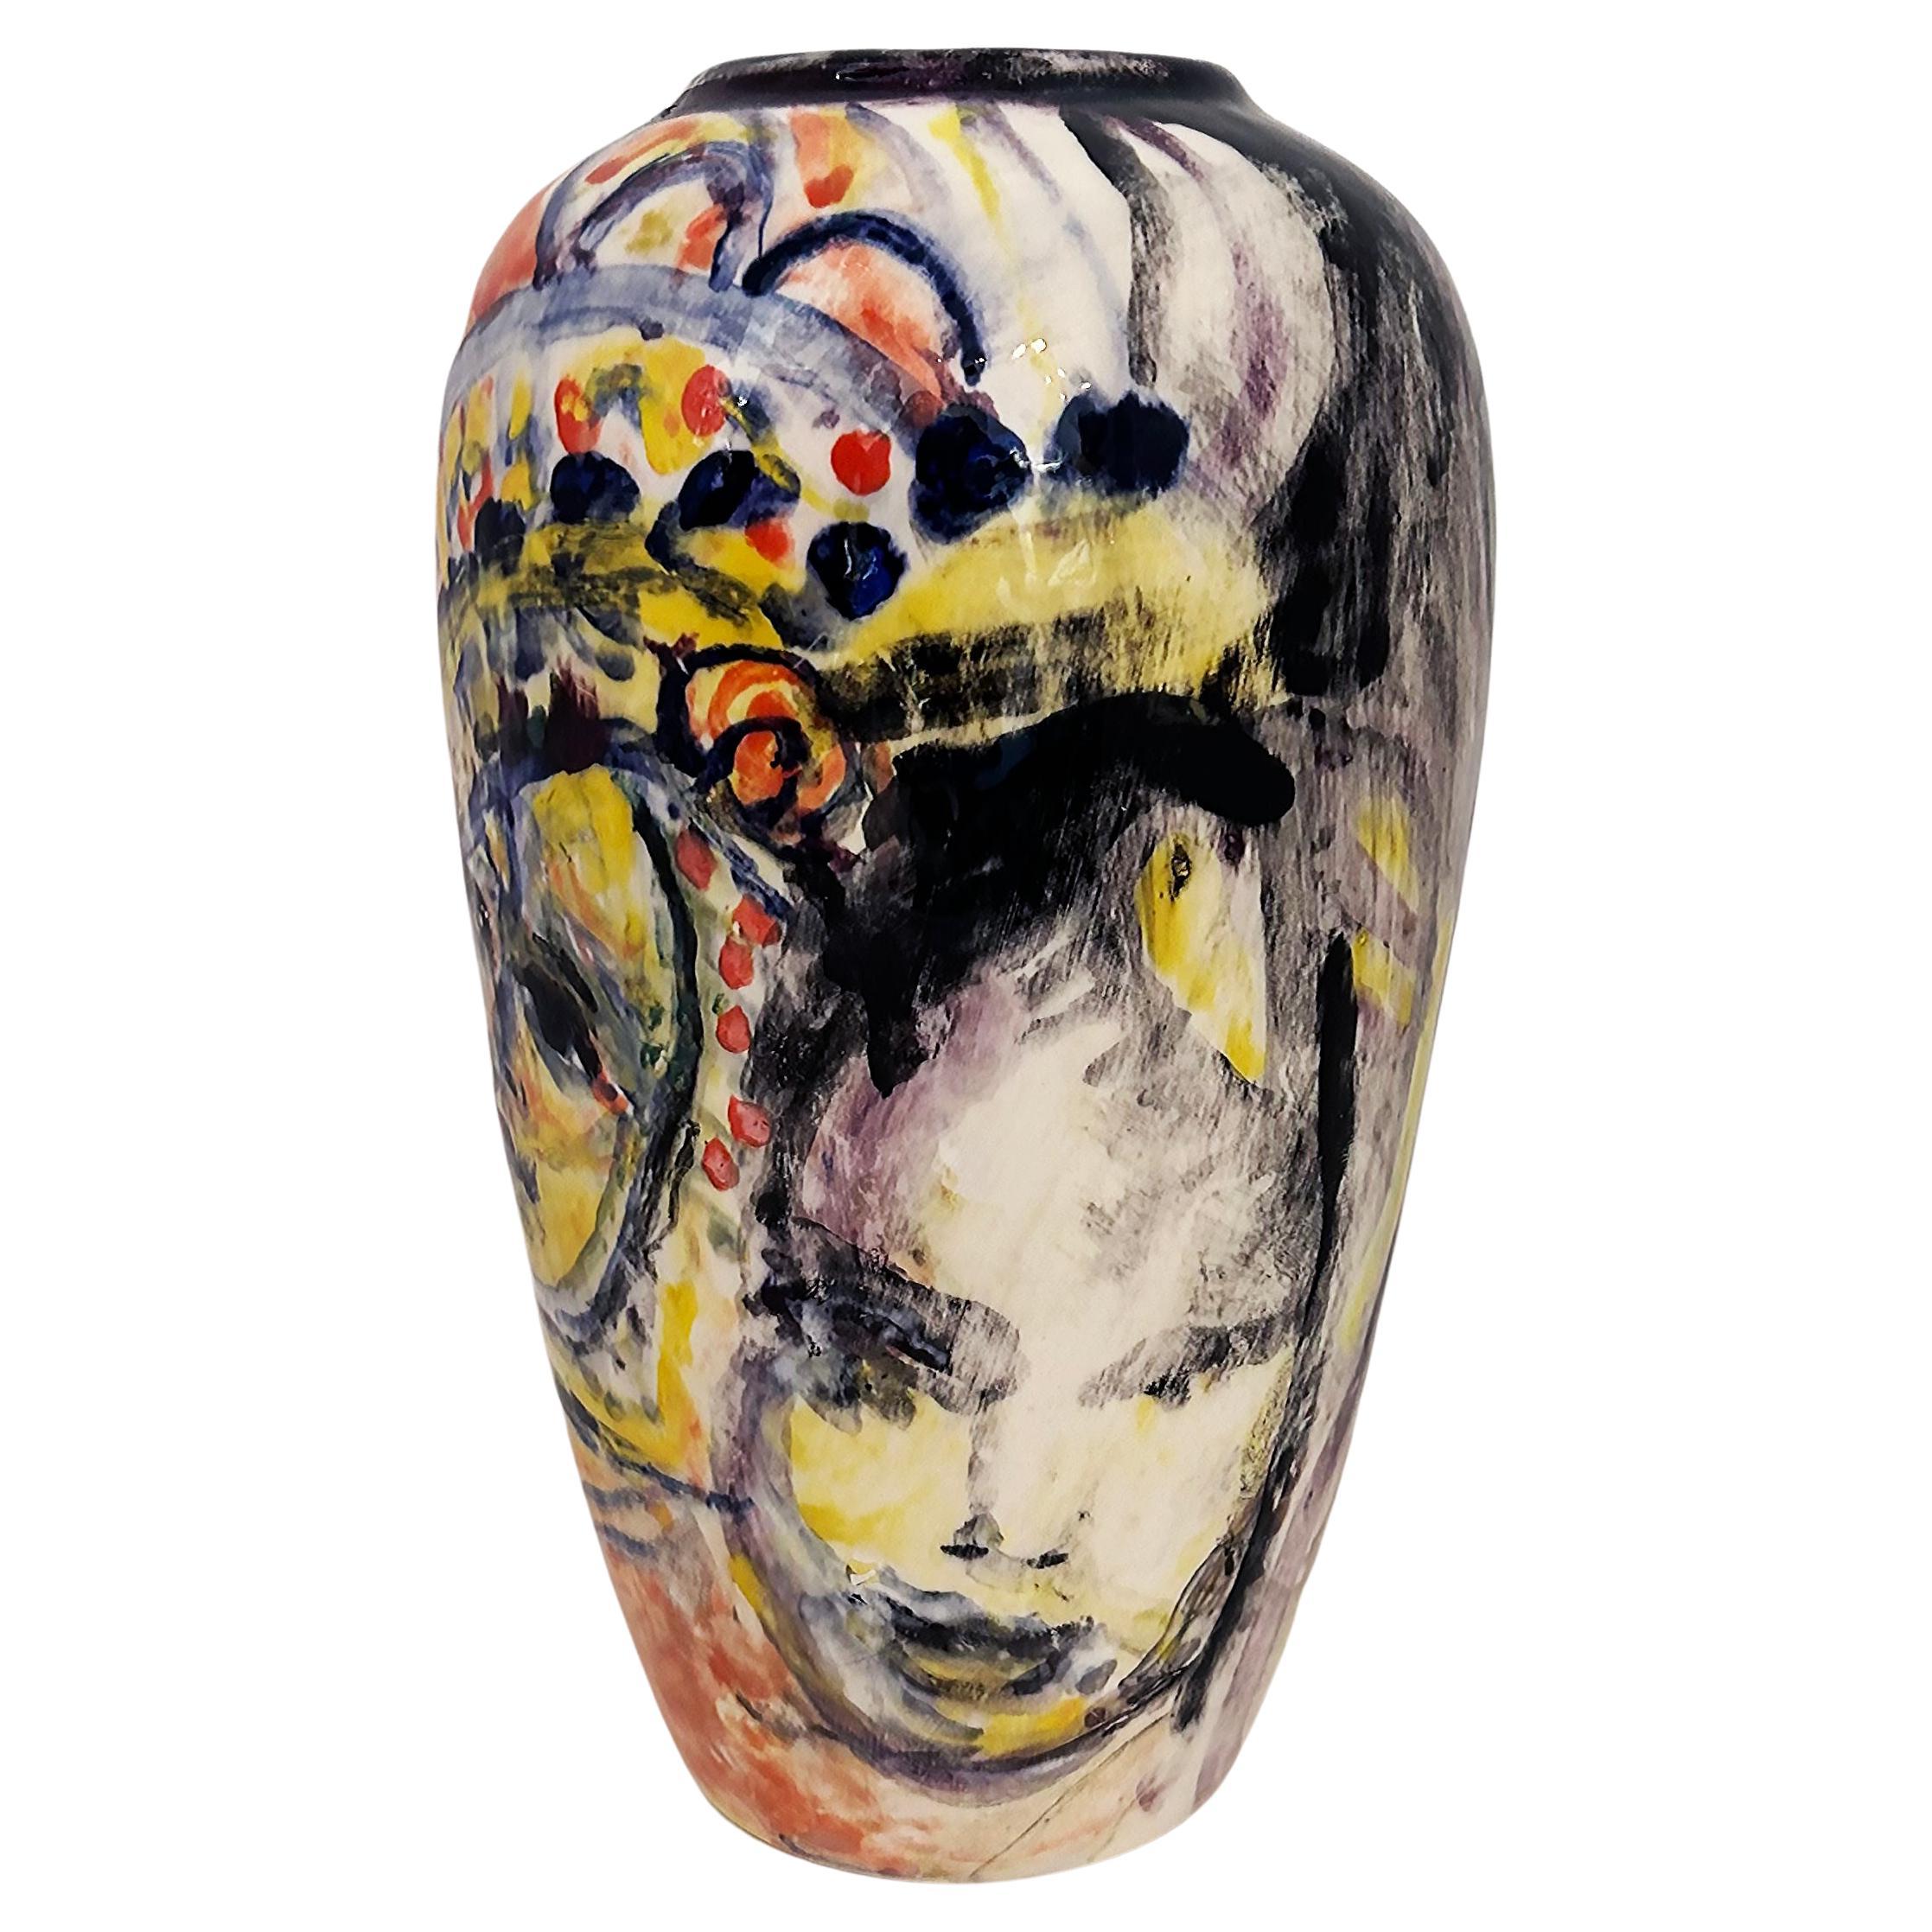 Hand-painted Ceramic Vase "Faces" by Gloria Allison Cuban American Artist